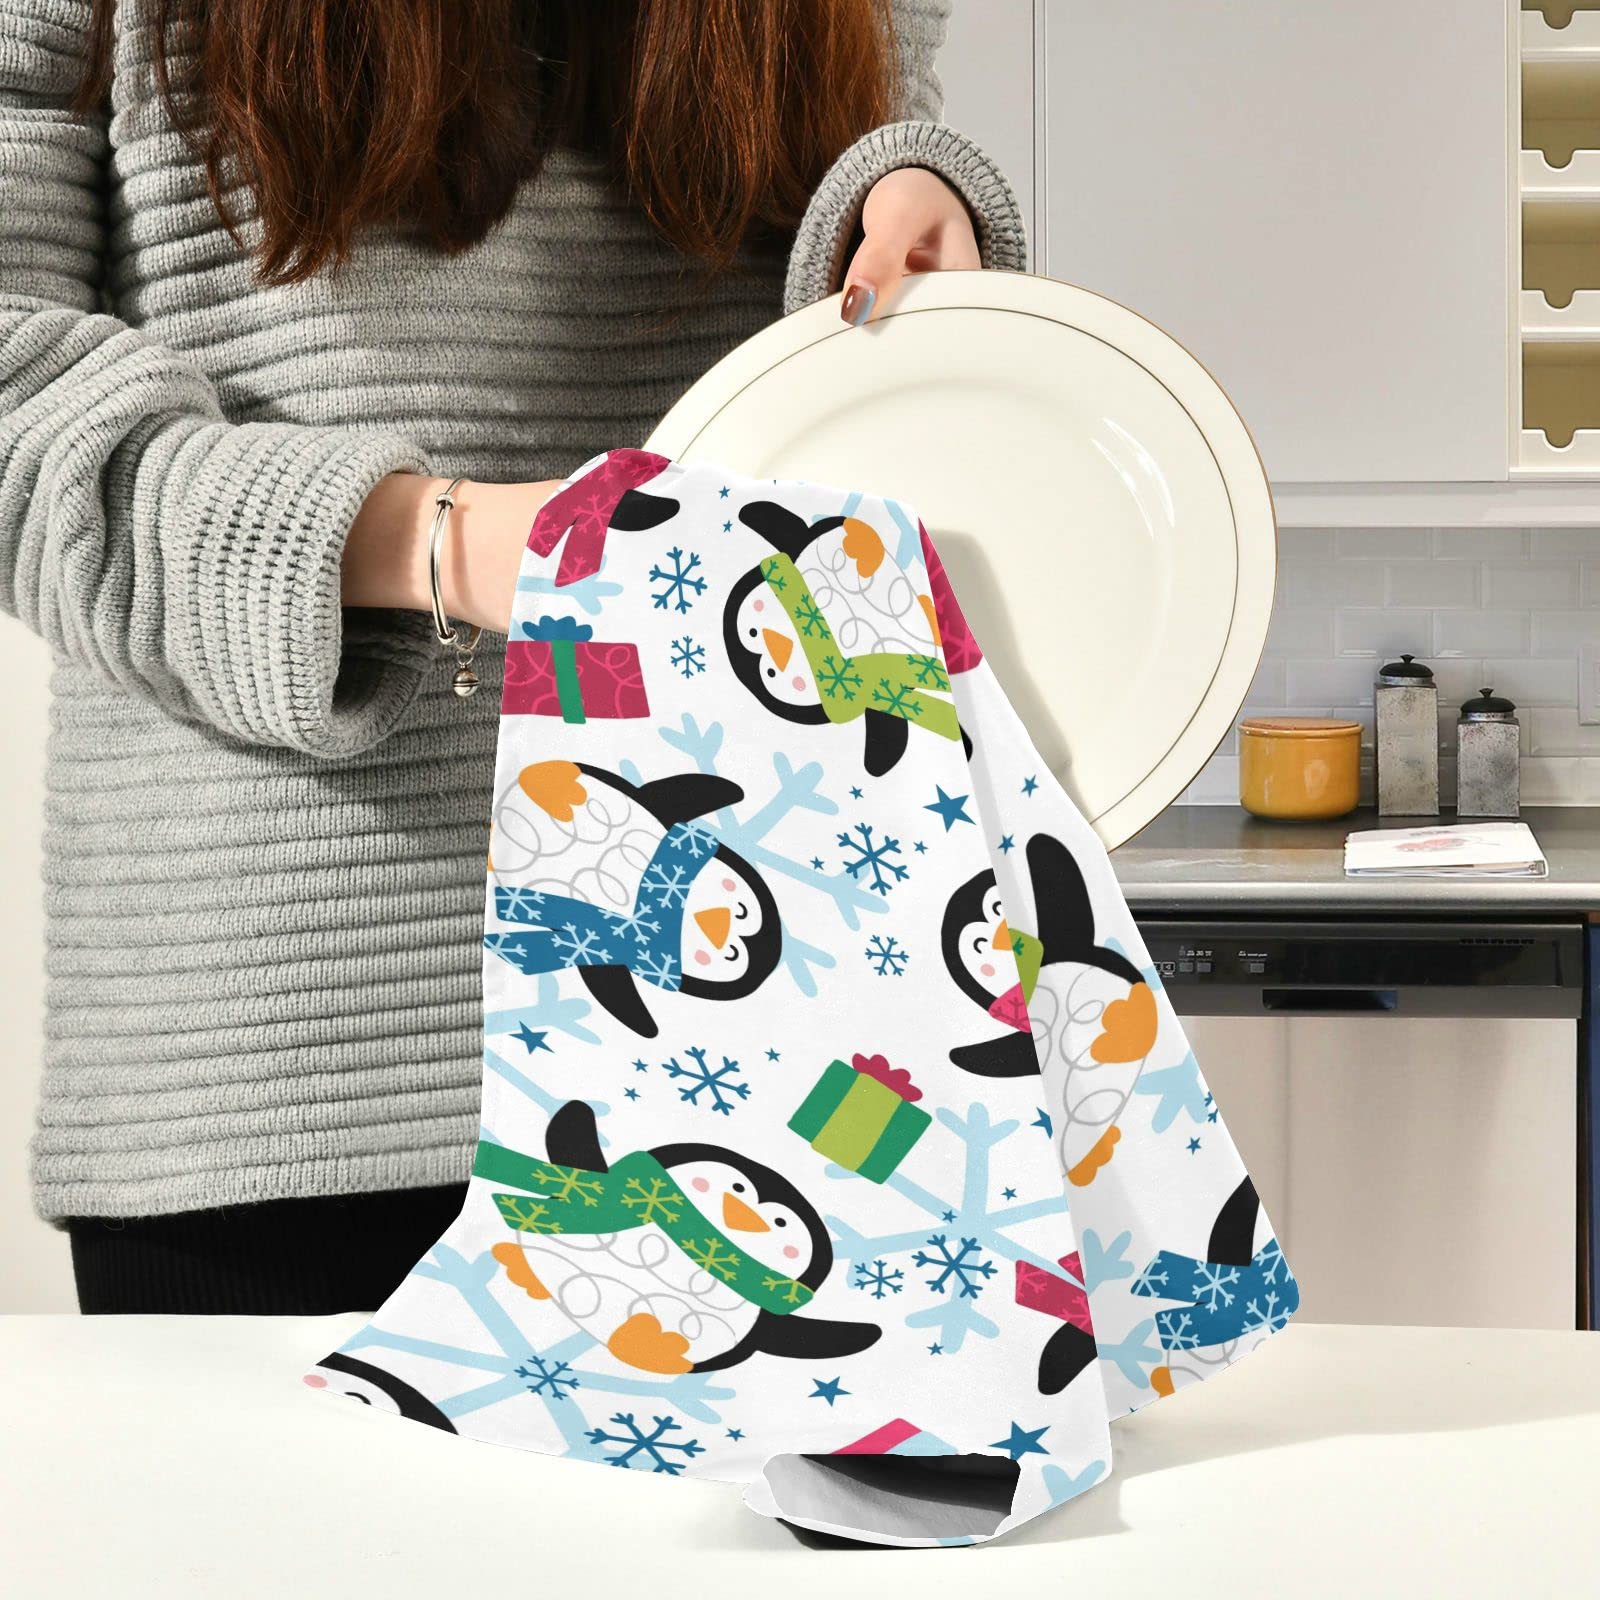 Qilmy Christmas Penguin Kitchen Dish Towel Set of 1, Soft Absorbent Dish Cloths Decorative Tea Bar Drying Towels, 18 x 28 Inch